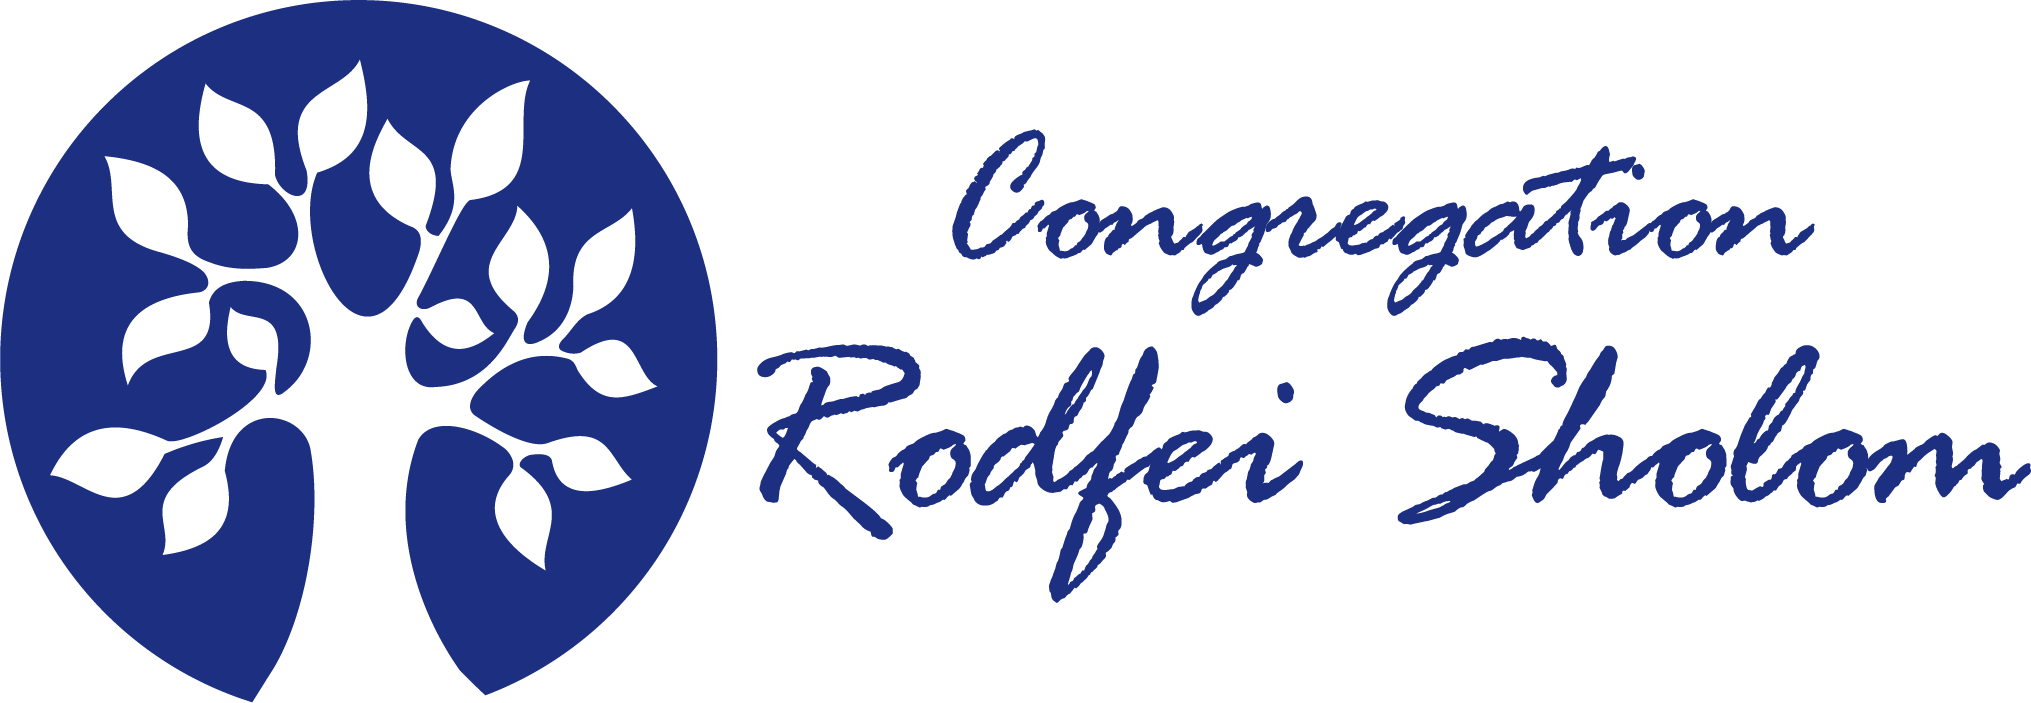 Cong. Rodfei Sholom - logo